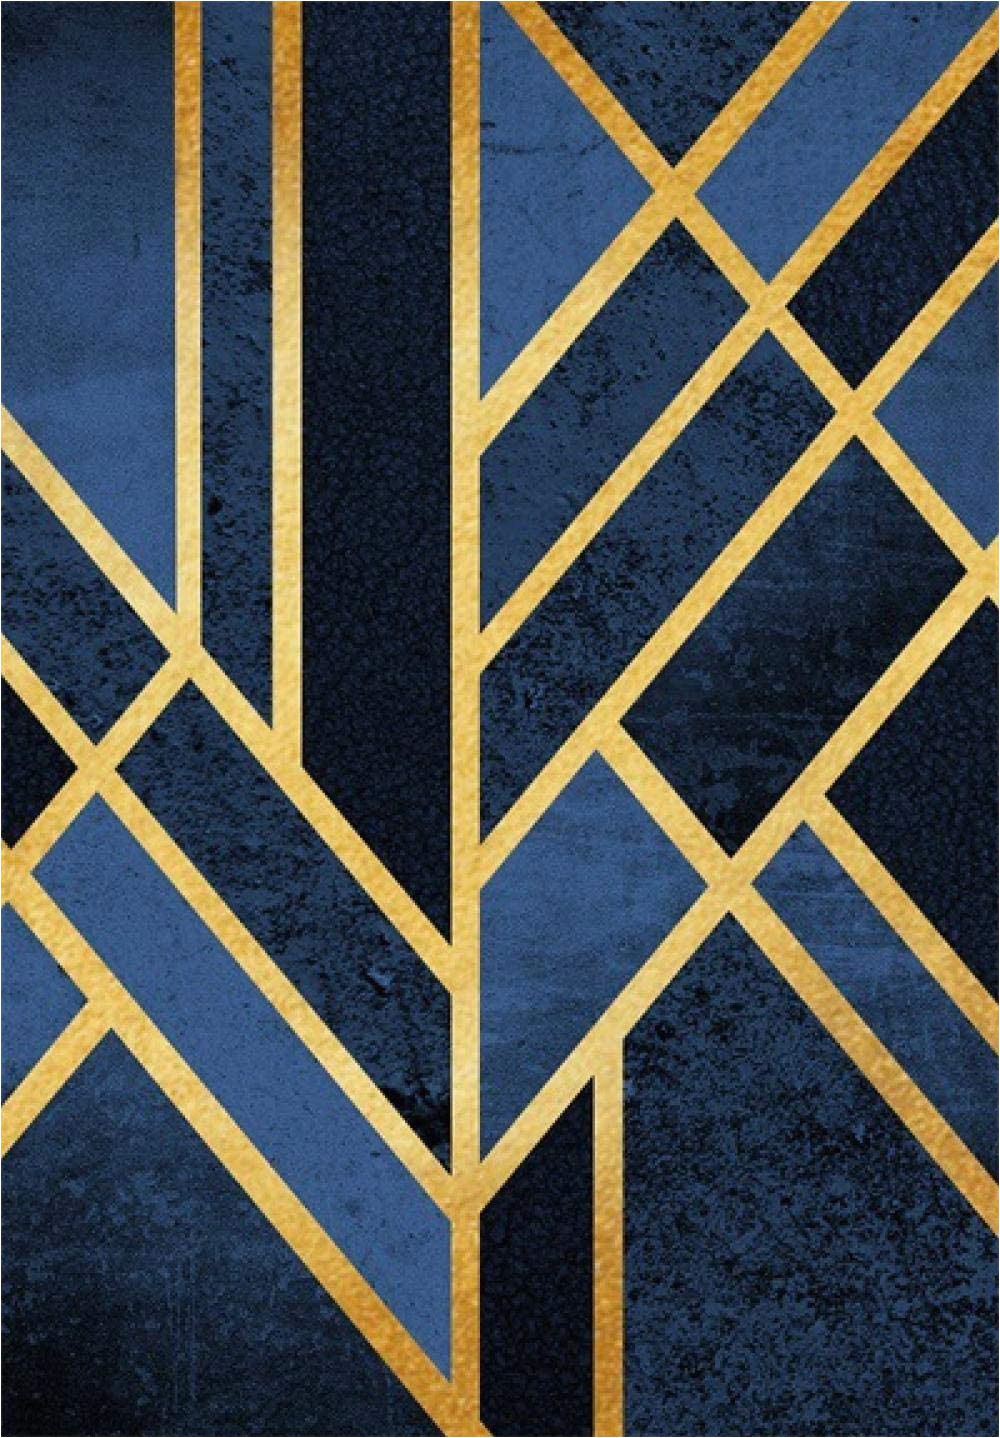 Navy Blue Geometric Rug Cmwardrobe Rugs Modern Carpet Traditional for Living Room Bedroom Traditional Geometric Art Navy Blue Black Gold soft touch Non Slip Xxl Extra Large